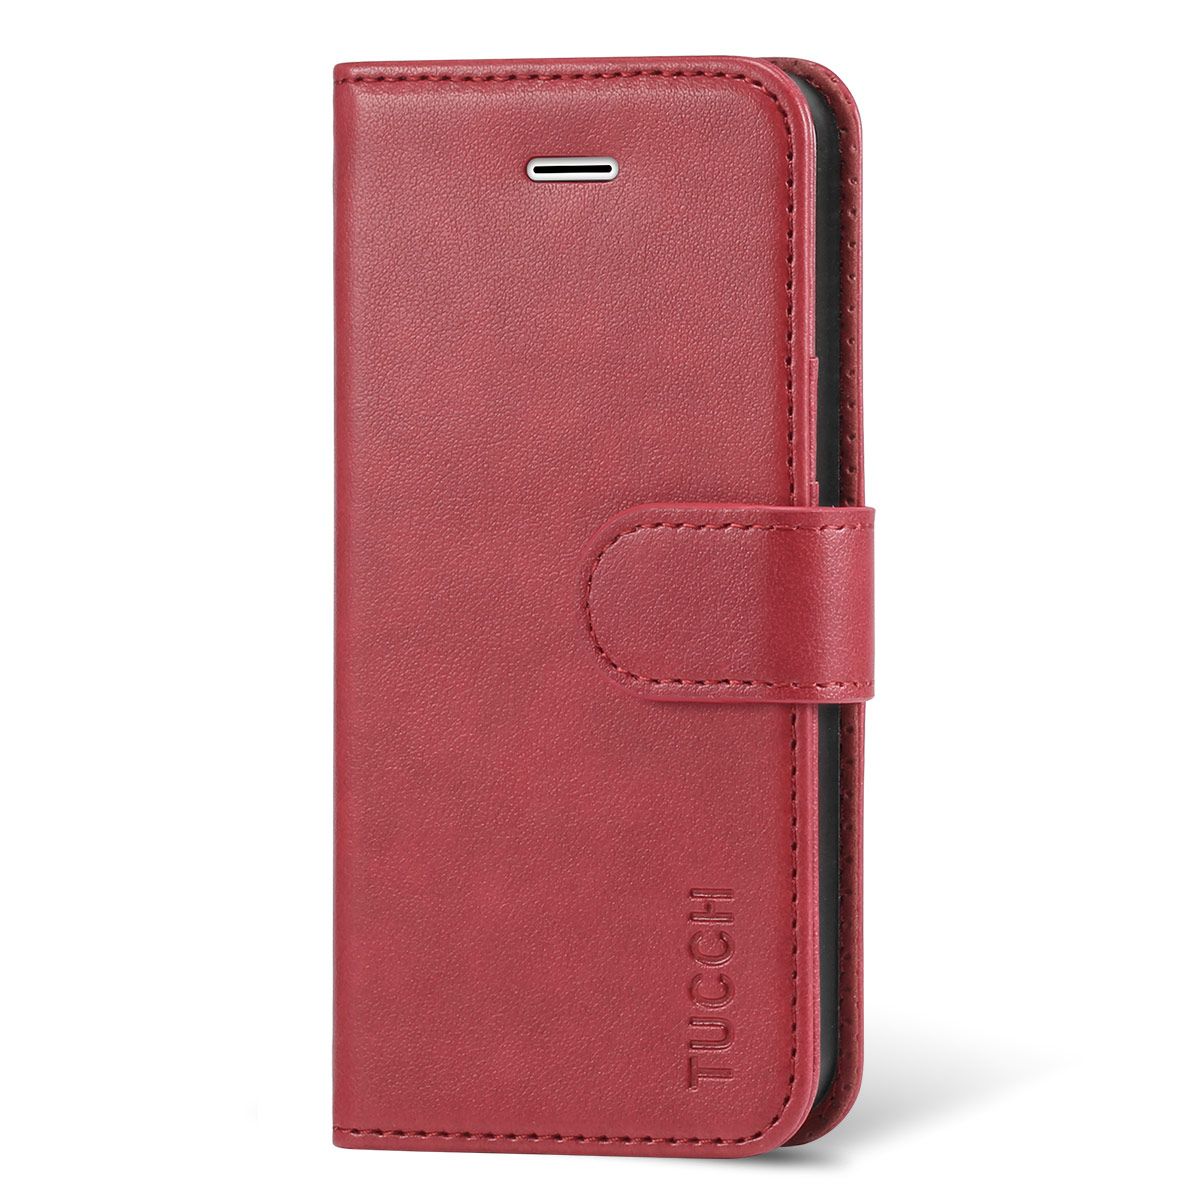 metalen Startpunt Wolk TUCCH Flip Leather Wallet Case, Magnetic Closure for iPhone SE/5S/5